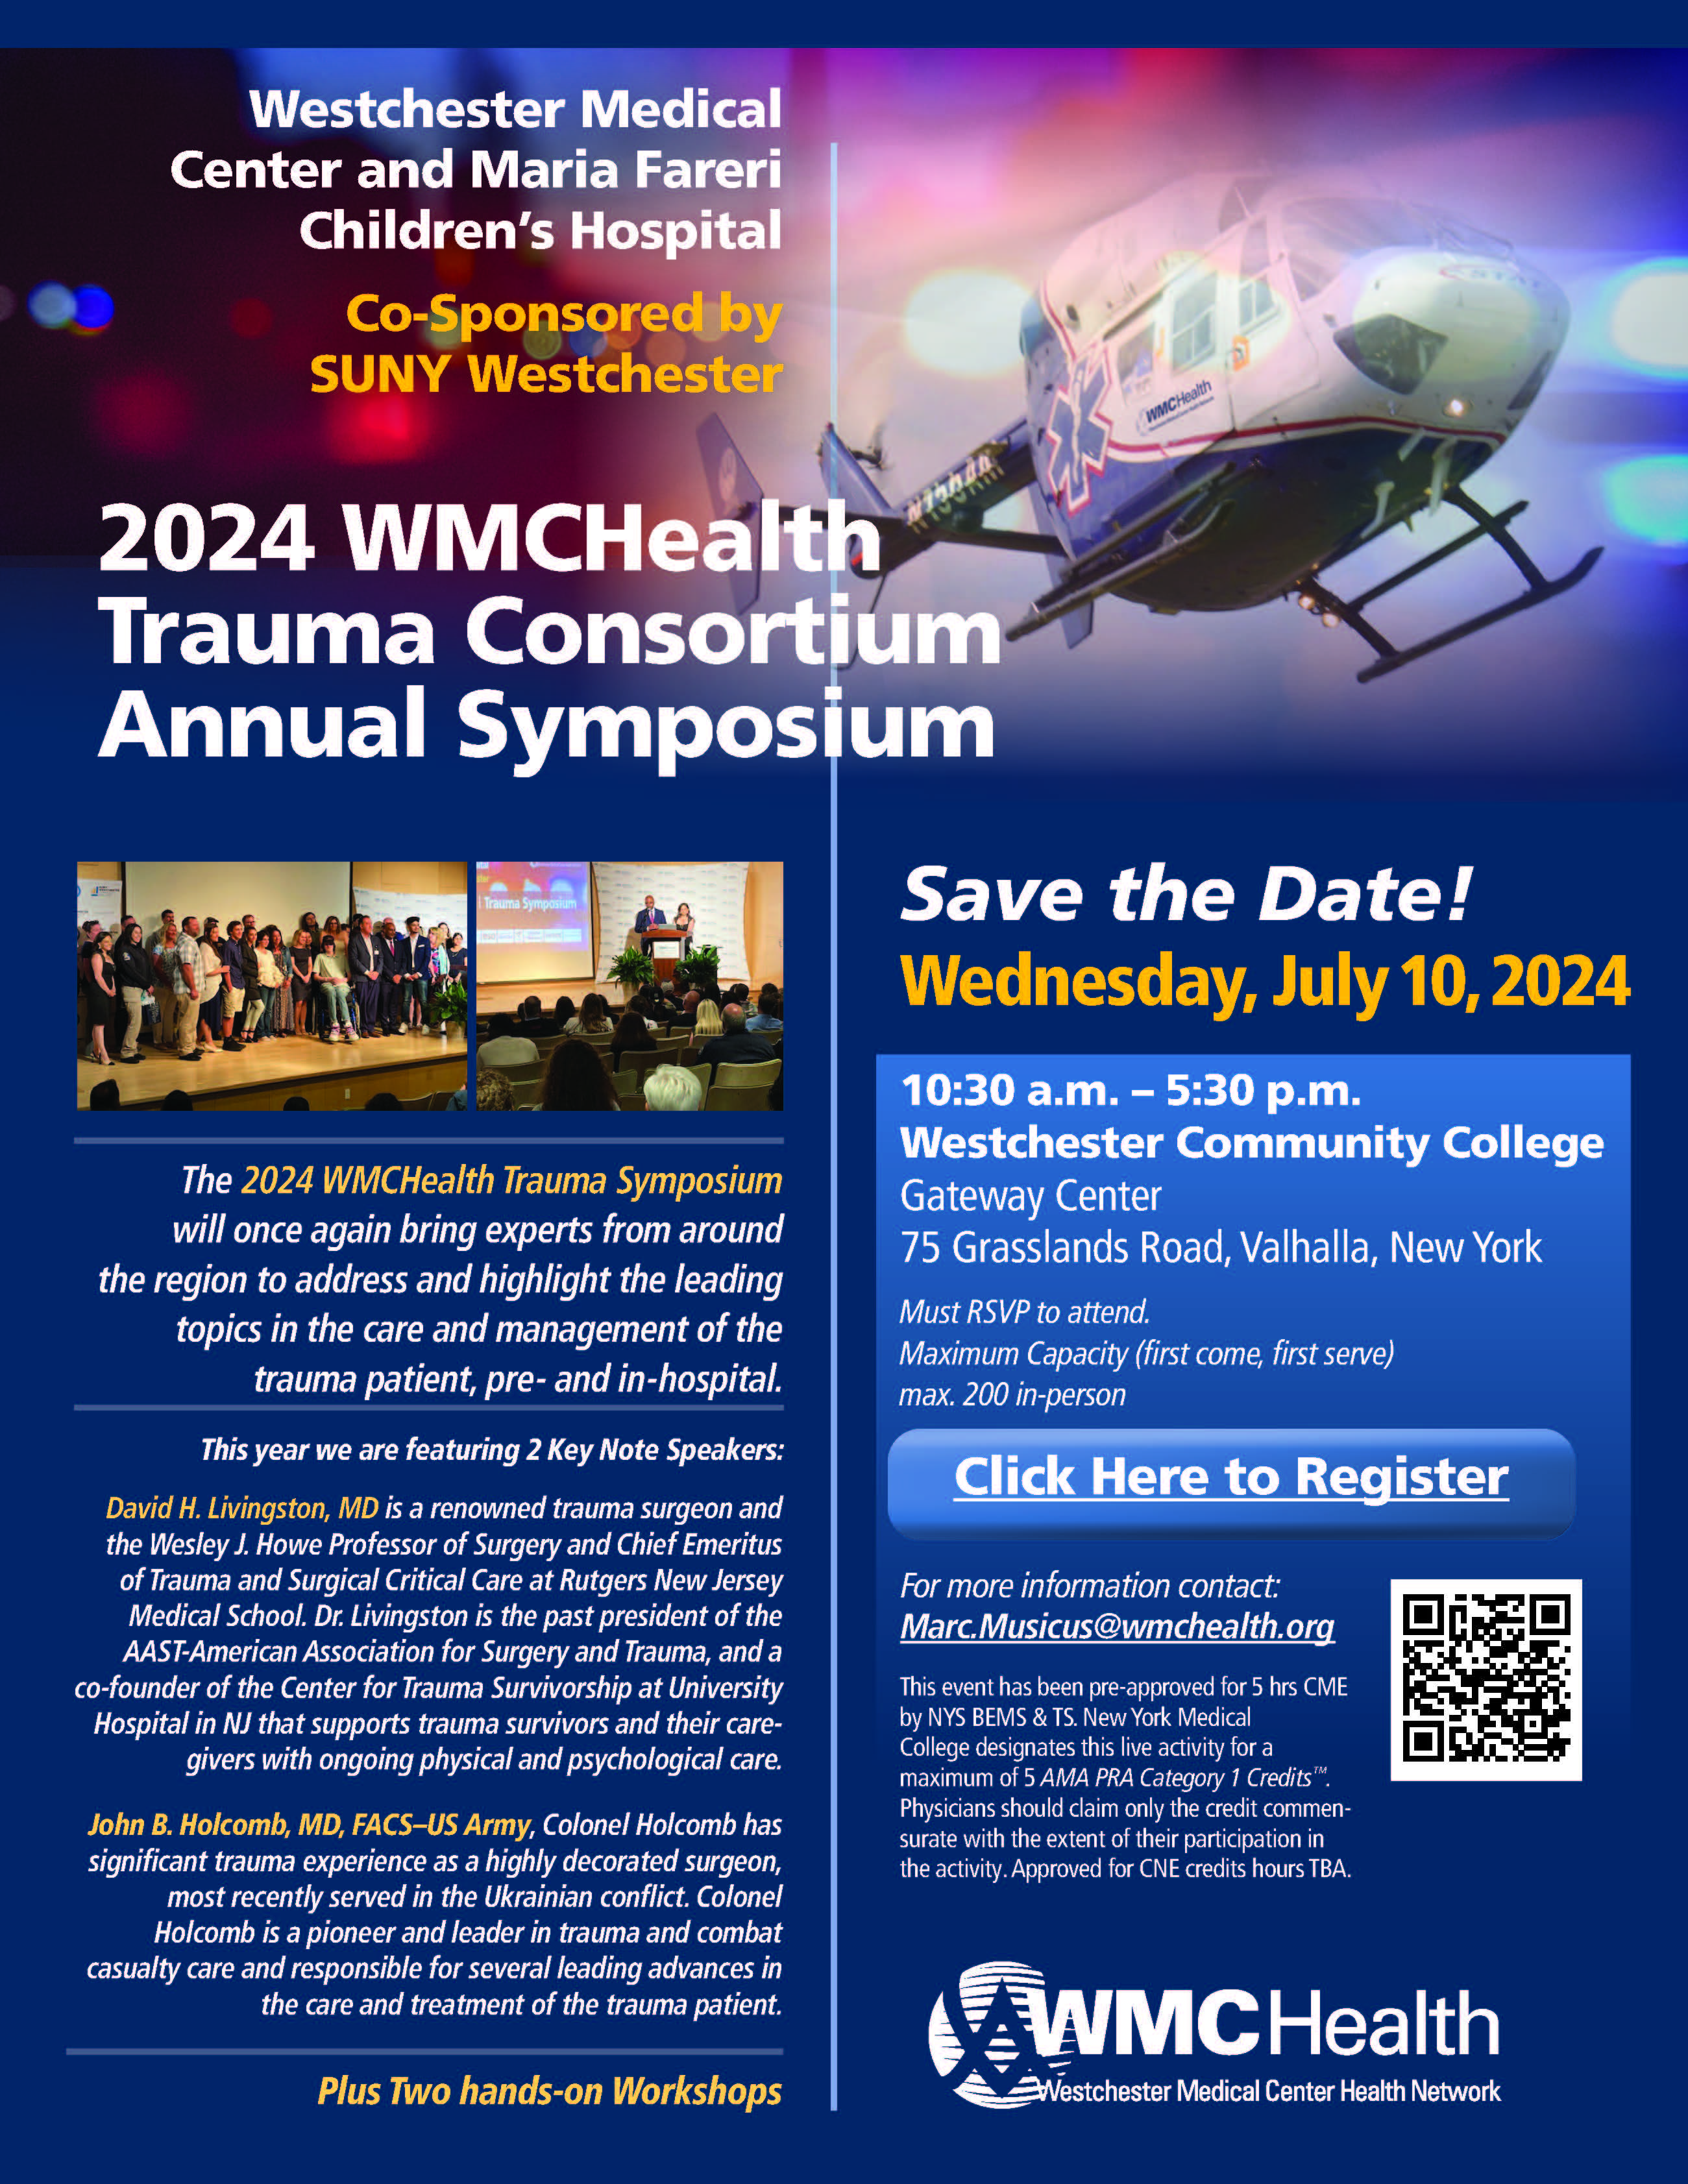 2024 WMCHealth Trauma Consortium Annual Symposium: Click to register